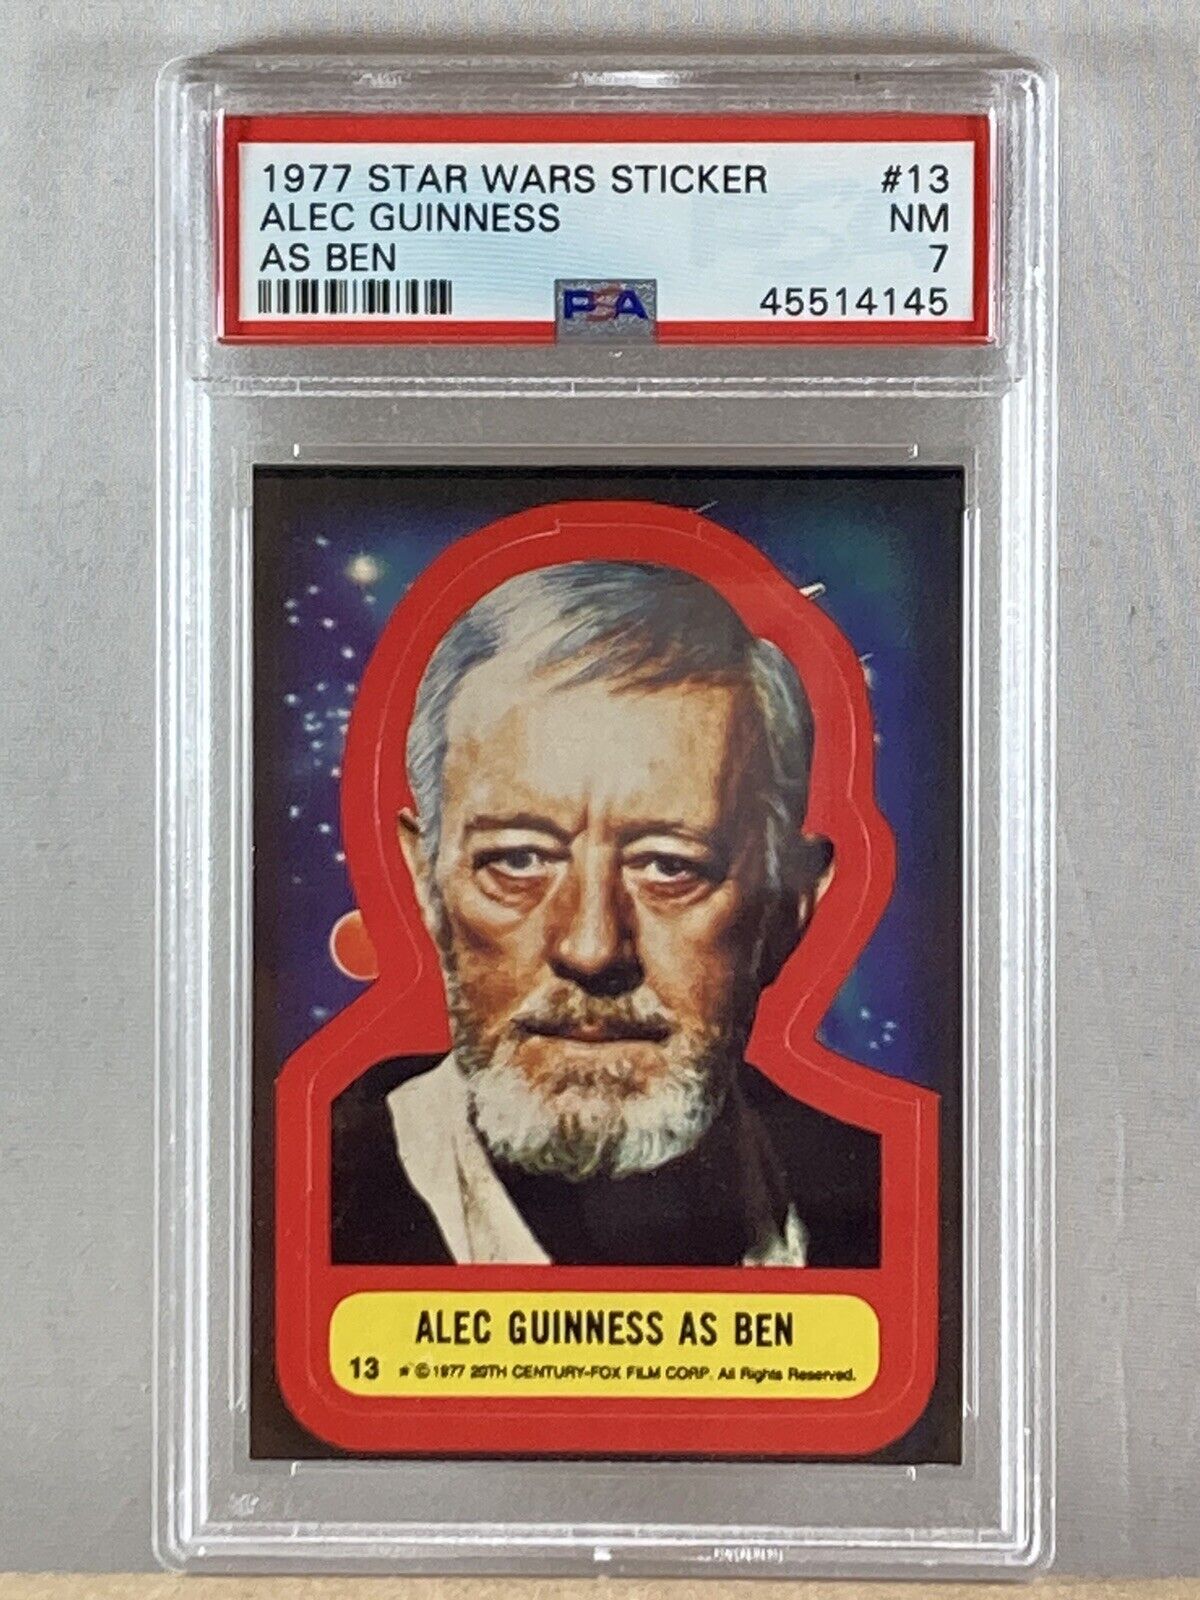 1977 Topps Star Wars Sticker #13 Alec Guinness As Ben PSA 7 NM